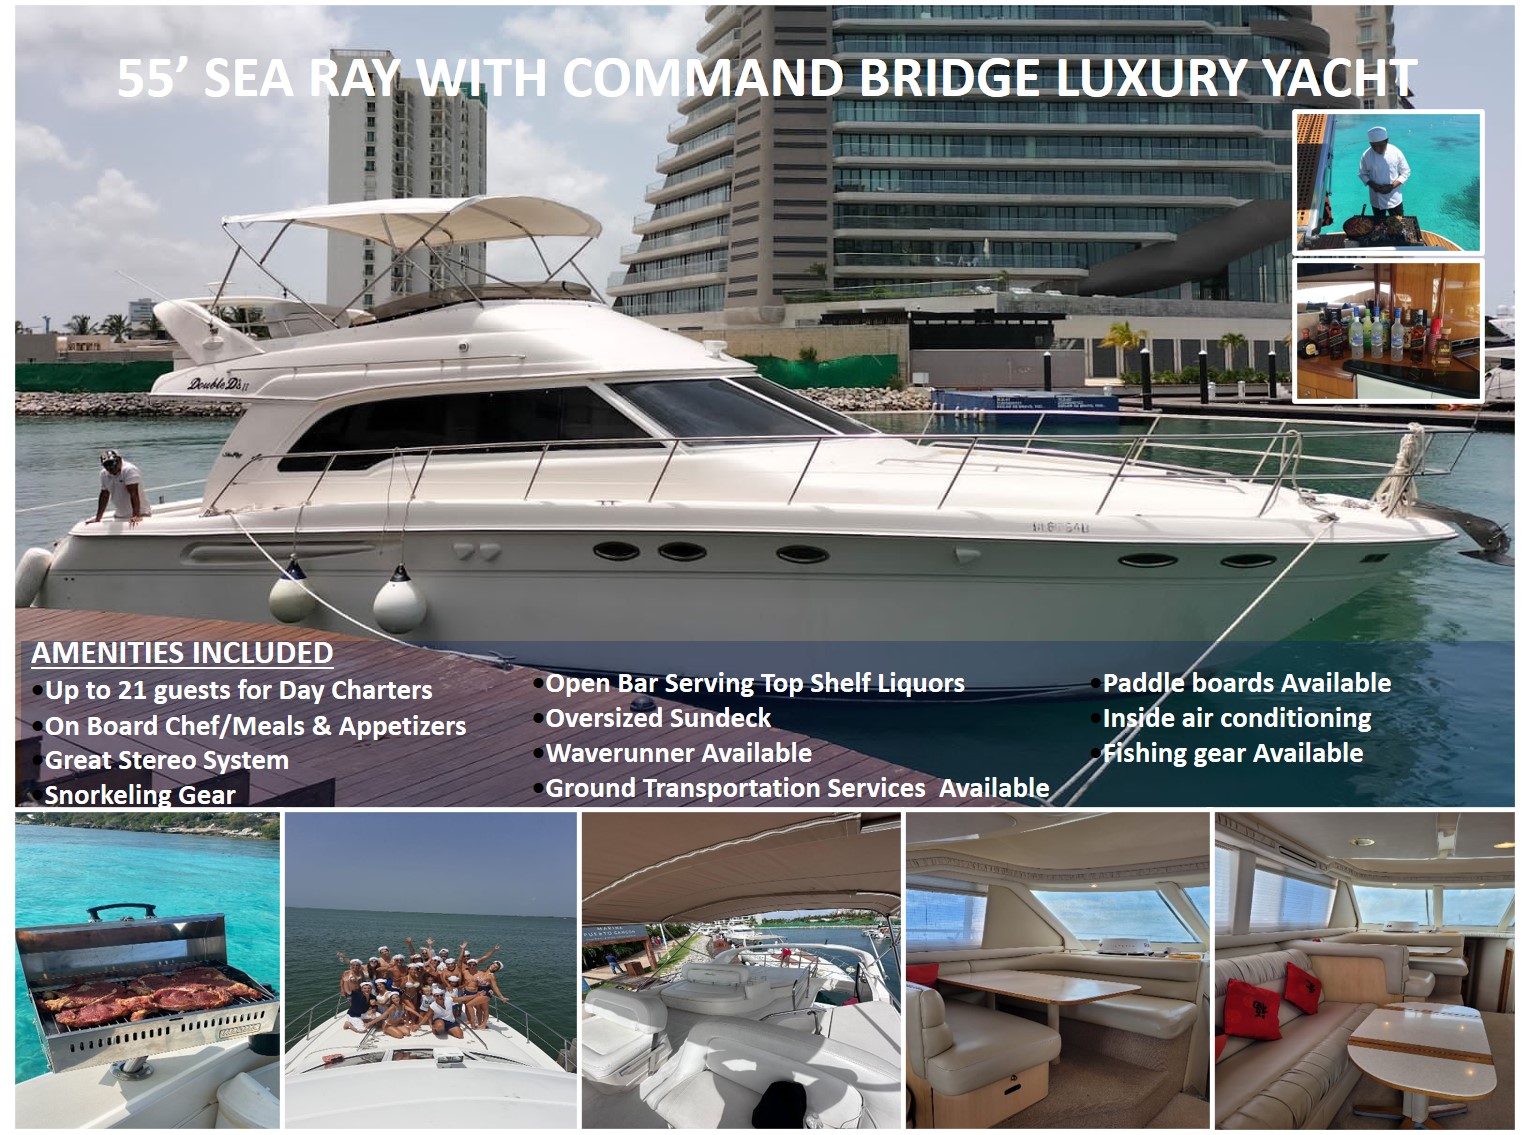 55 Sea Ray Fly with Command Bridge Luxury Yacht